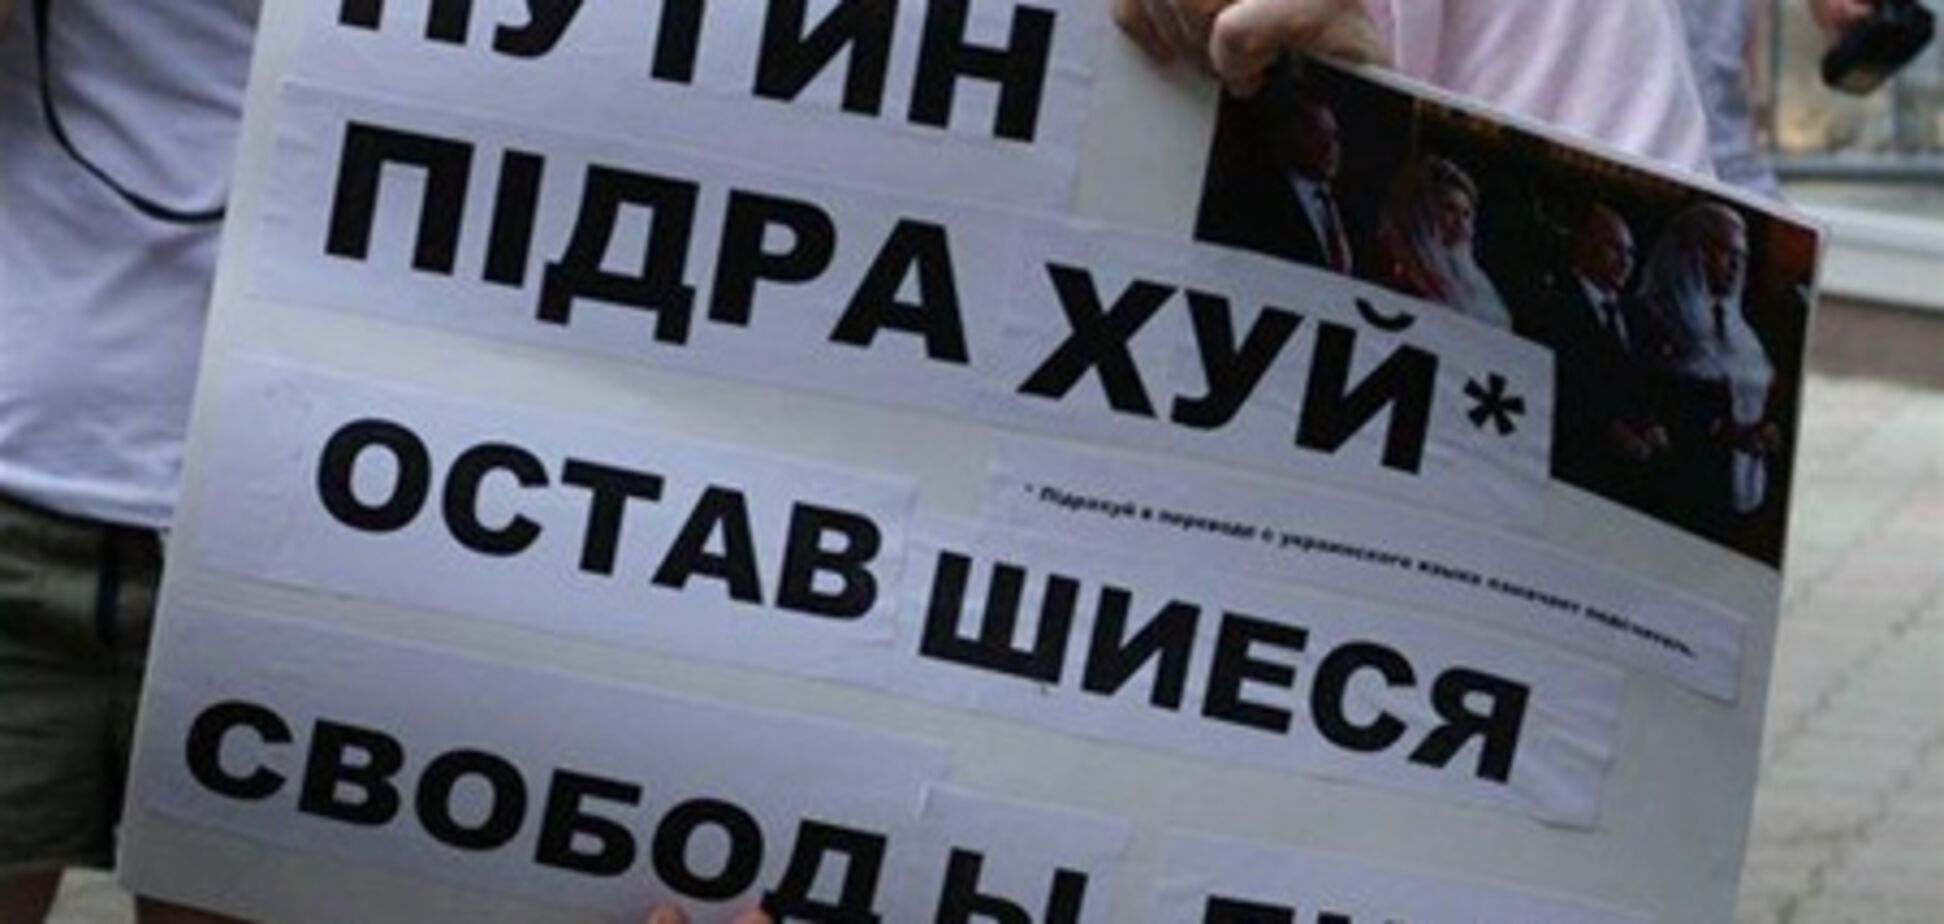 Оппозиционера арестовали на сутки за слово 'пiдрахуй' в адрес Путина